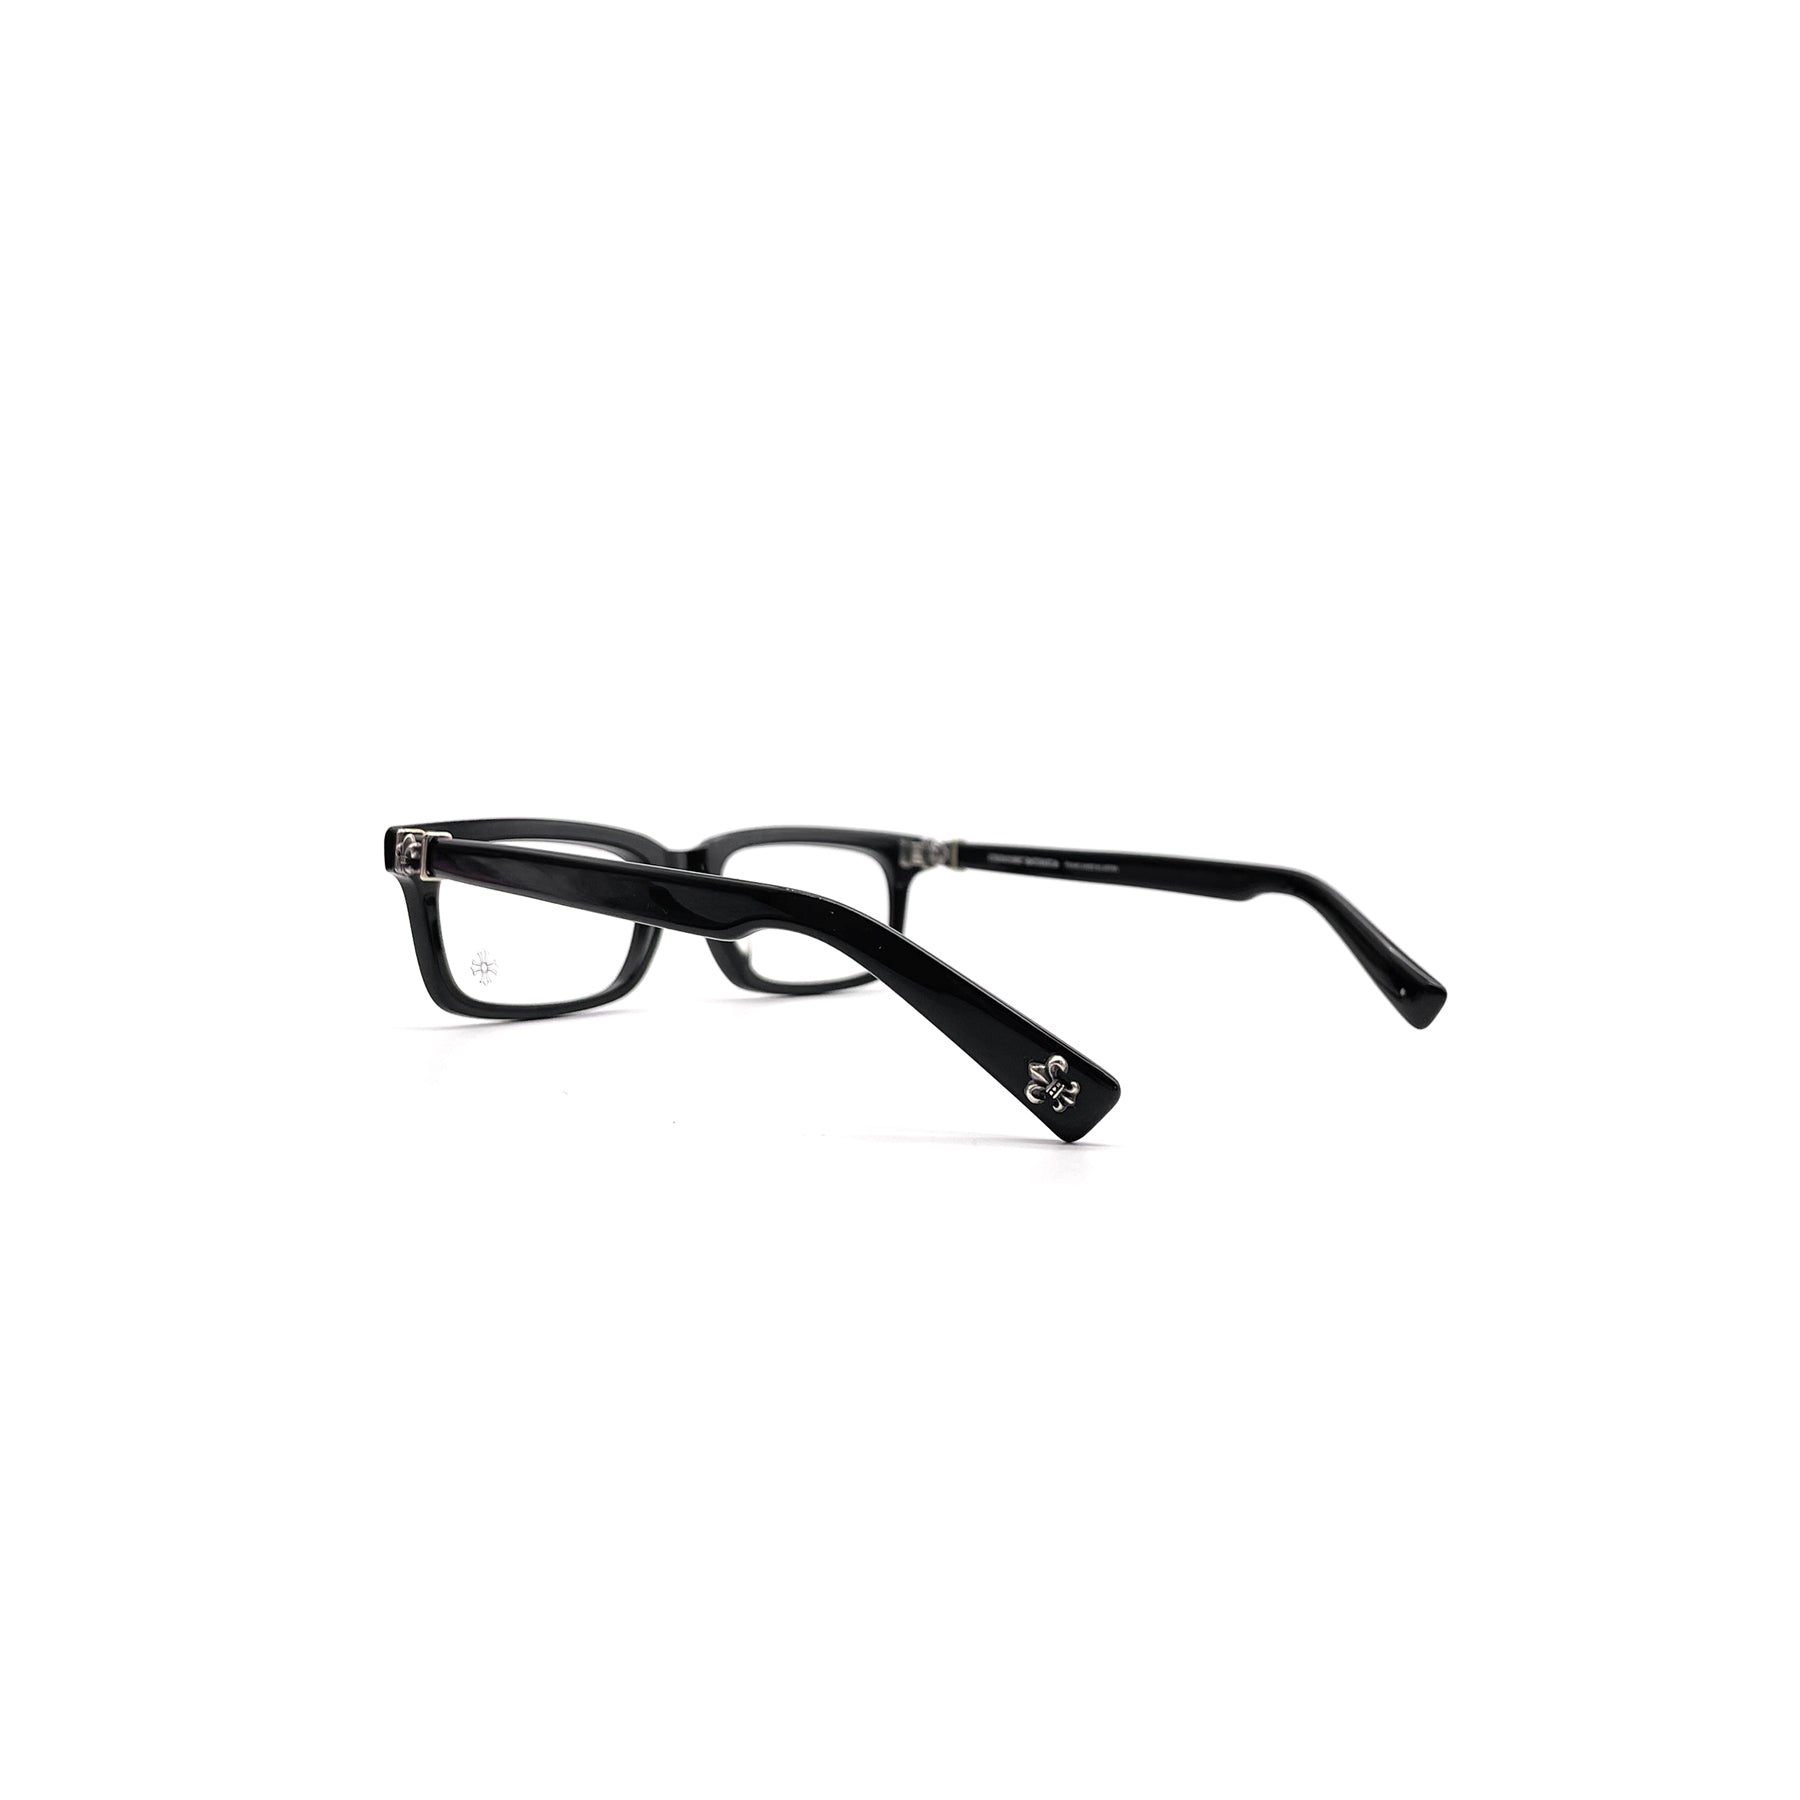 Chrome Hearts PONTIFASS Black&Silver BK Fleur Glasses Frame - SHENGLI ROAD MARKET